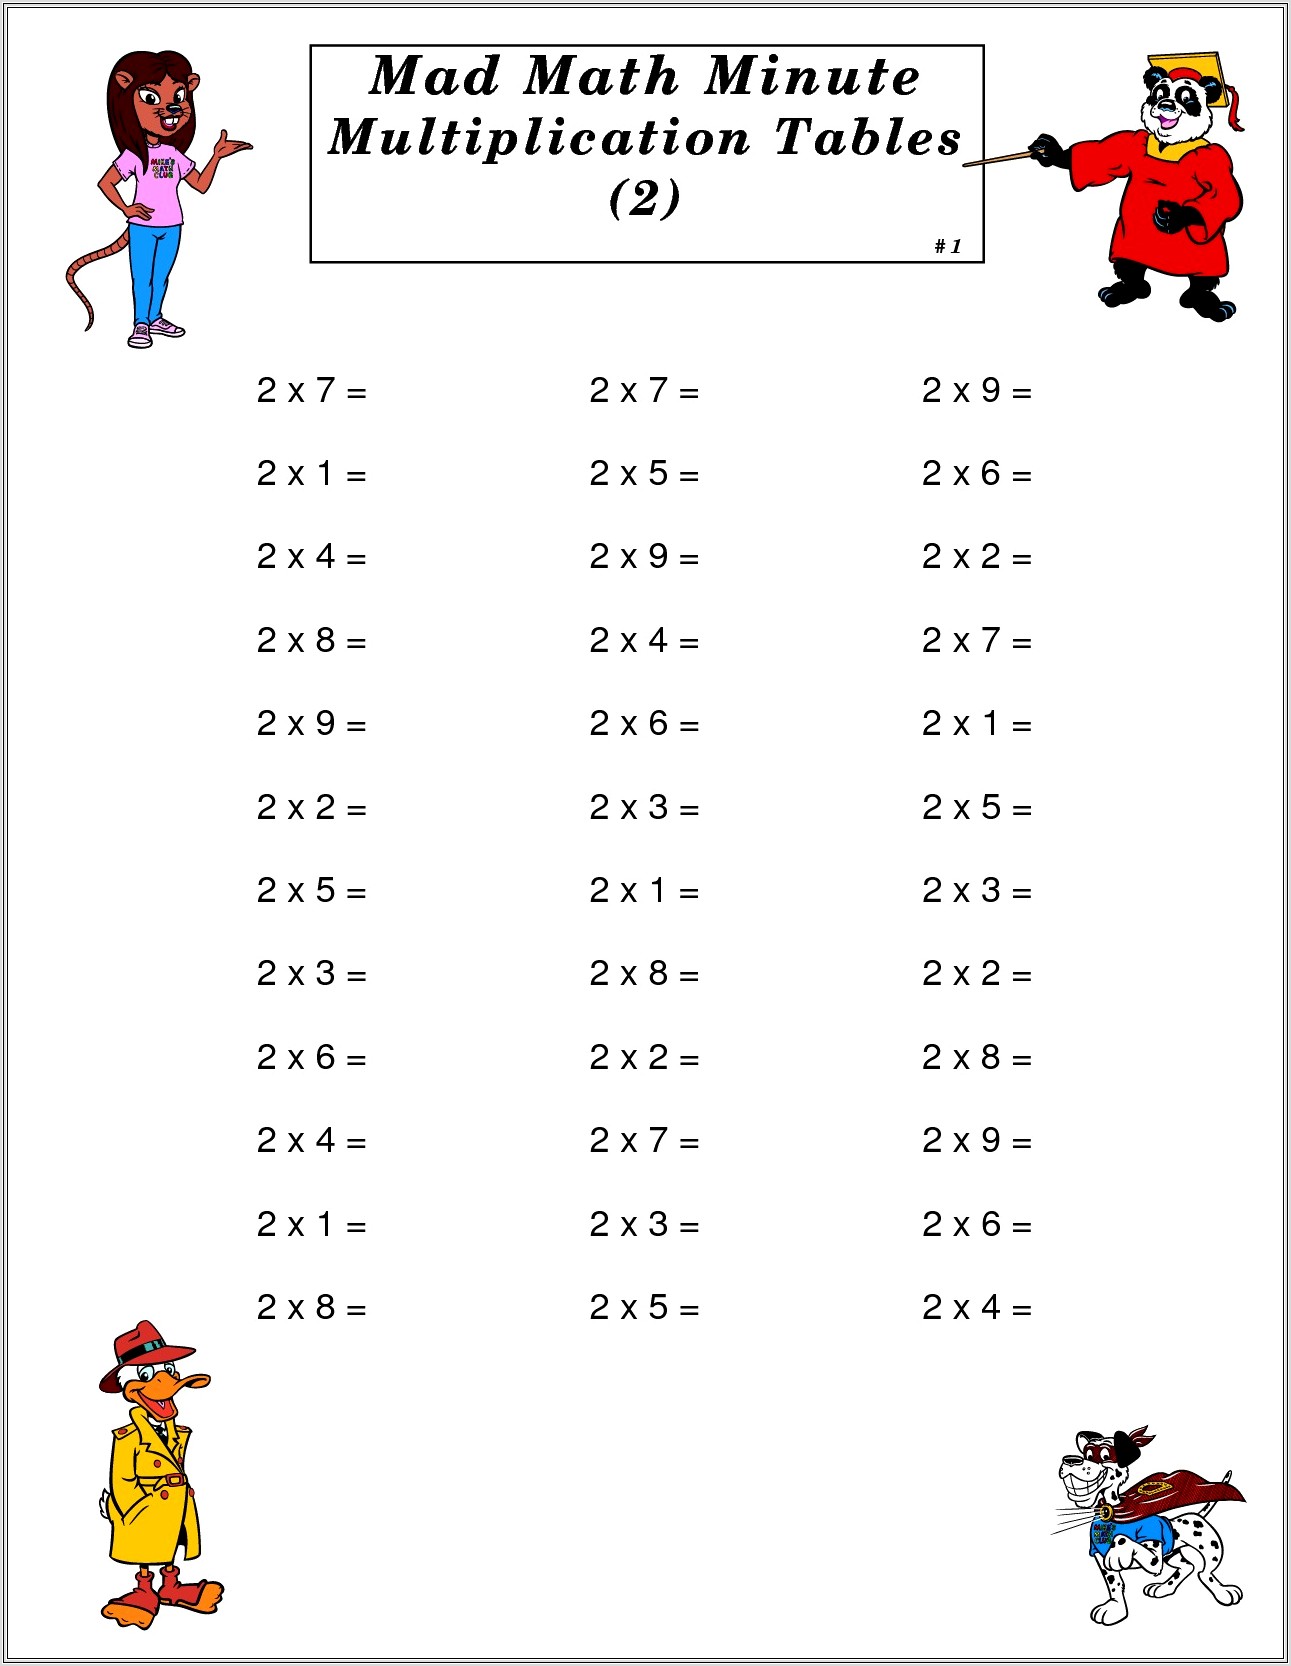 Math Multiplication Minute Worksheets